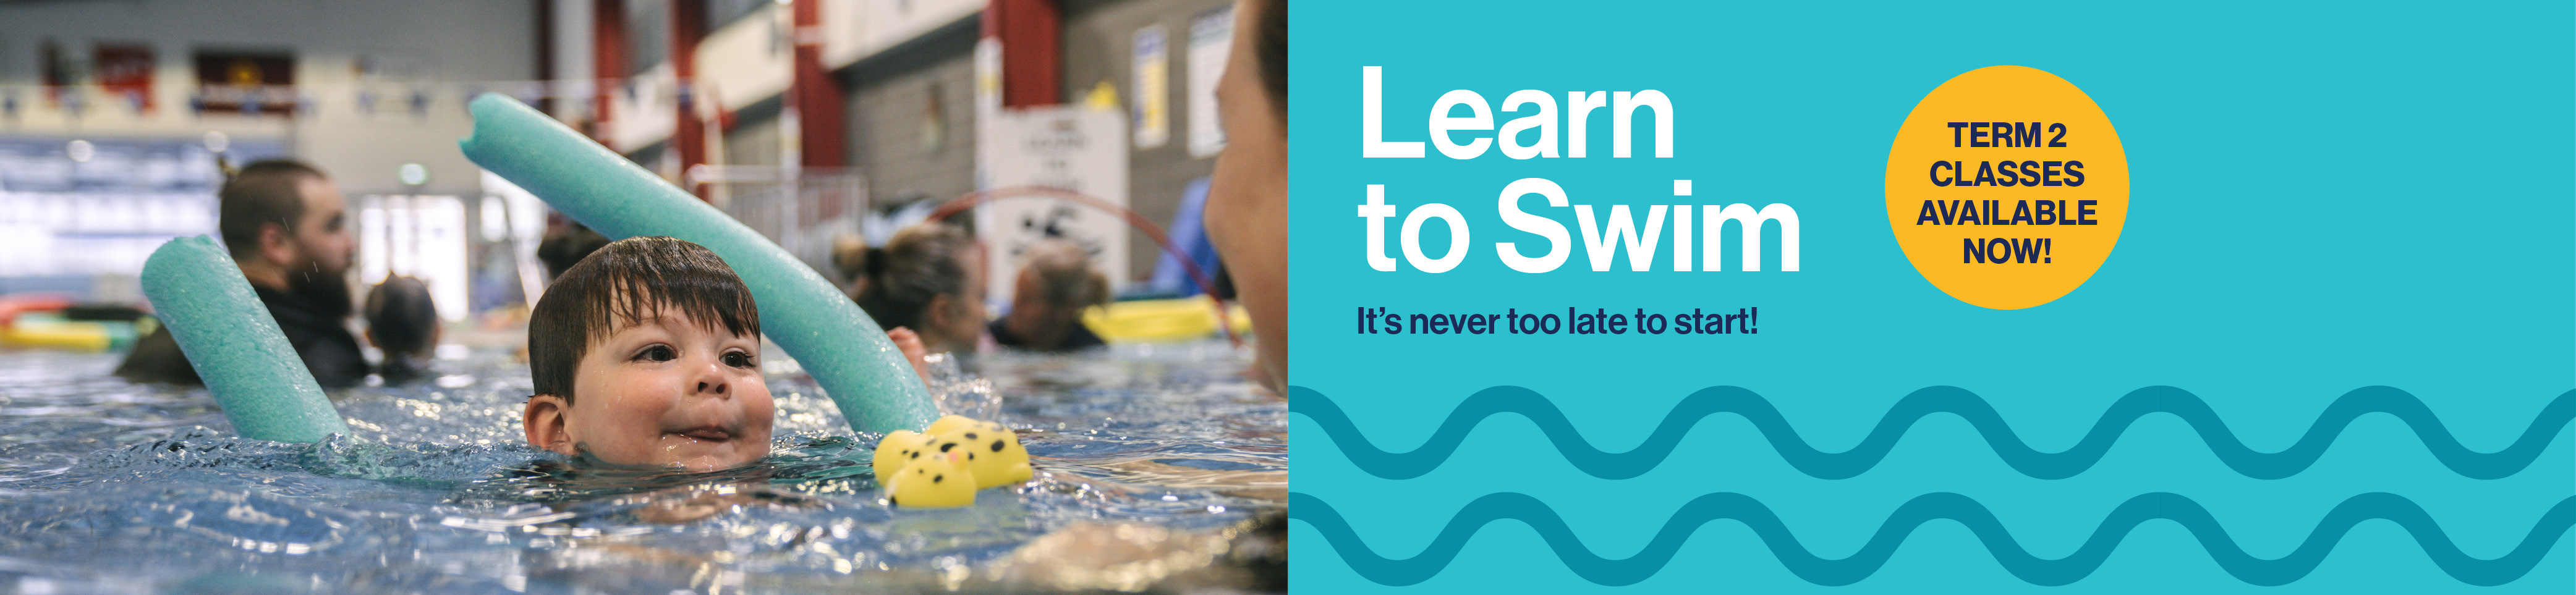 WSAC-051-wsac-learn-to-swim-term-2-banner.jpg